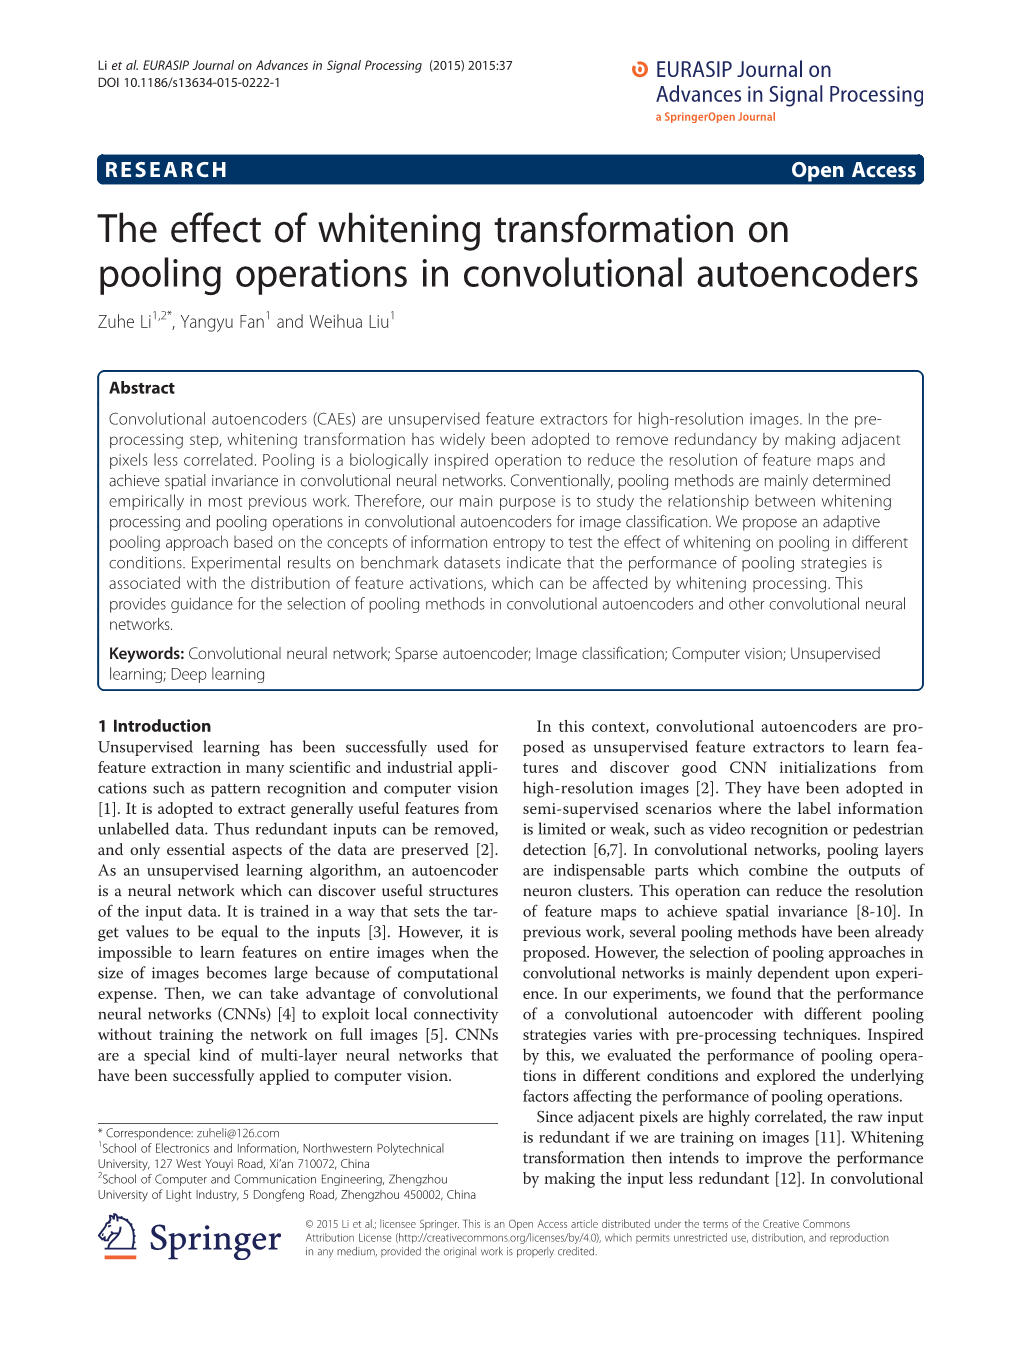 The Effect of Whitening Transformation on Pooling Operations in Convolutional Autoencoders Zuhe Li1,2*, Yangyu Fan1 and Weihua Liu1